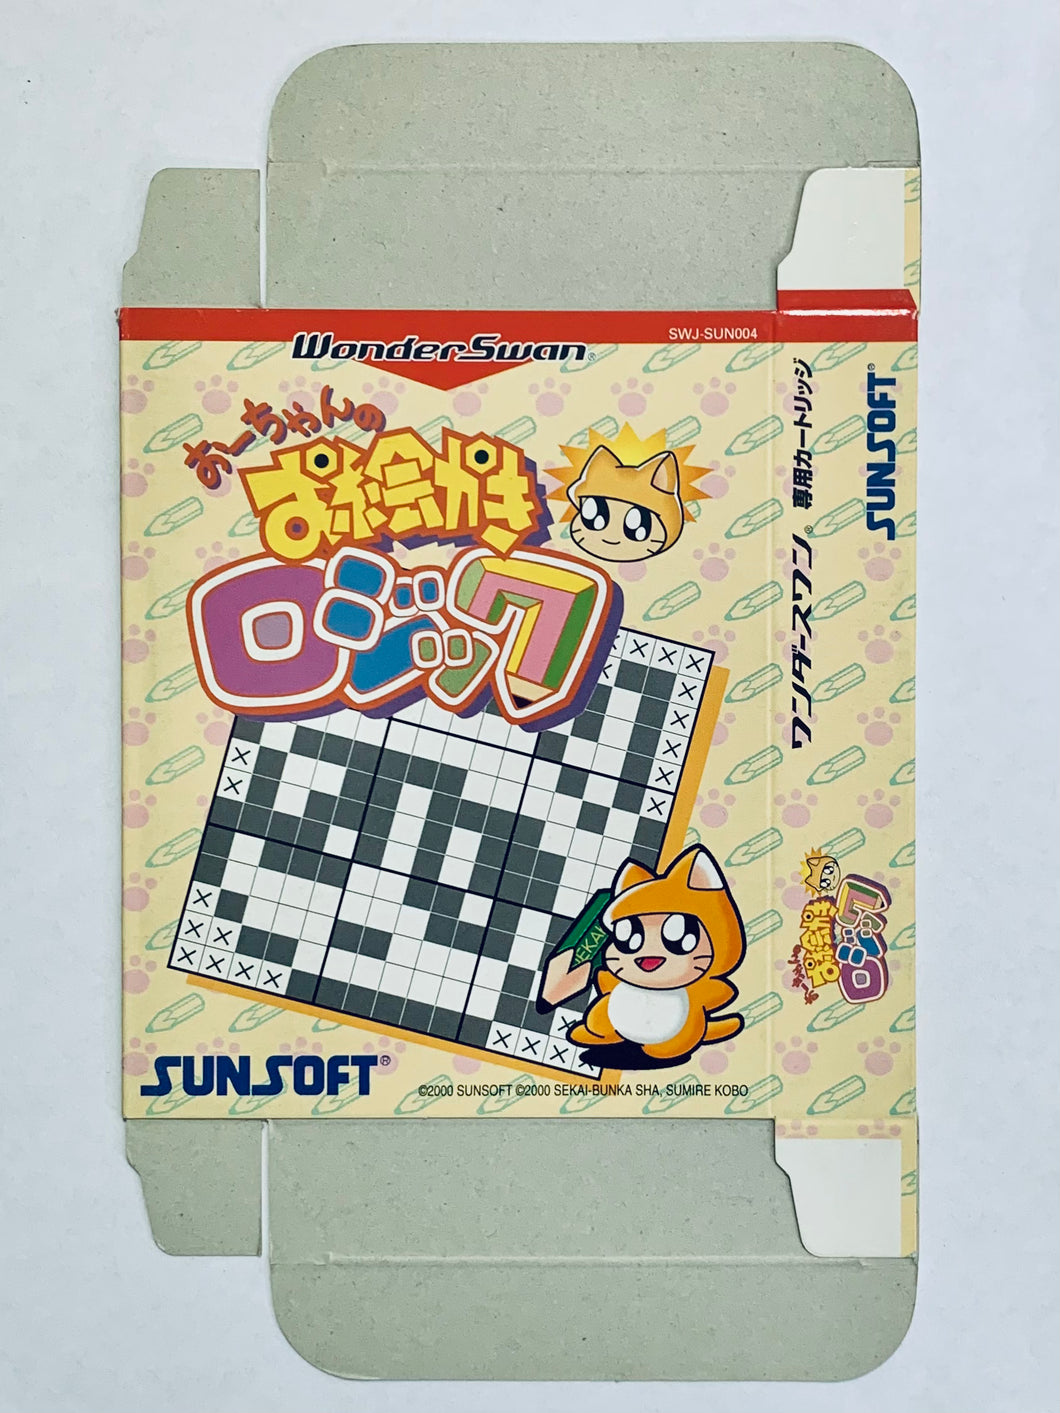 Ochan no Oekaki Logic - WonderSwan Color - WSC - JP - Box Only (SWJ-SUN004)